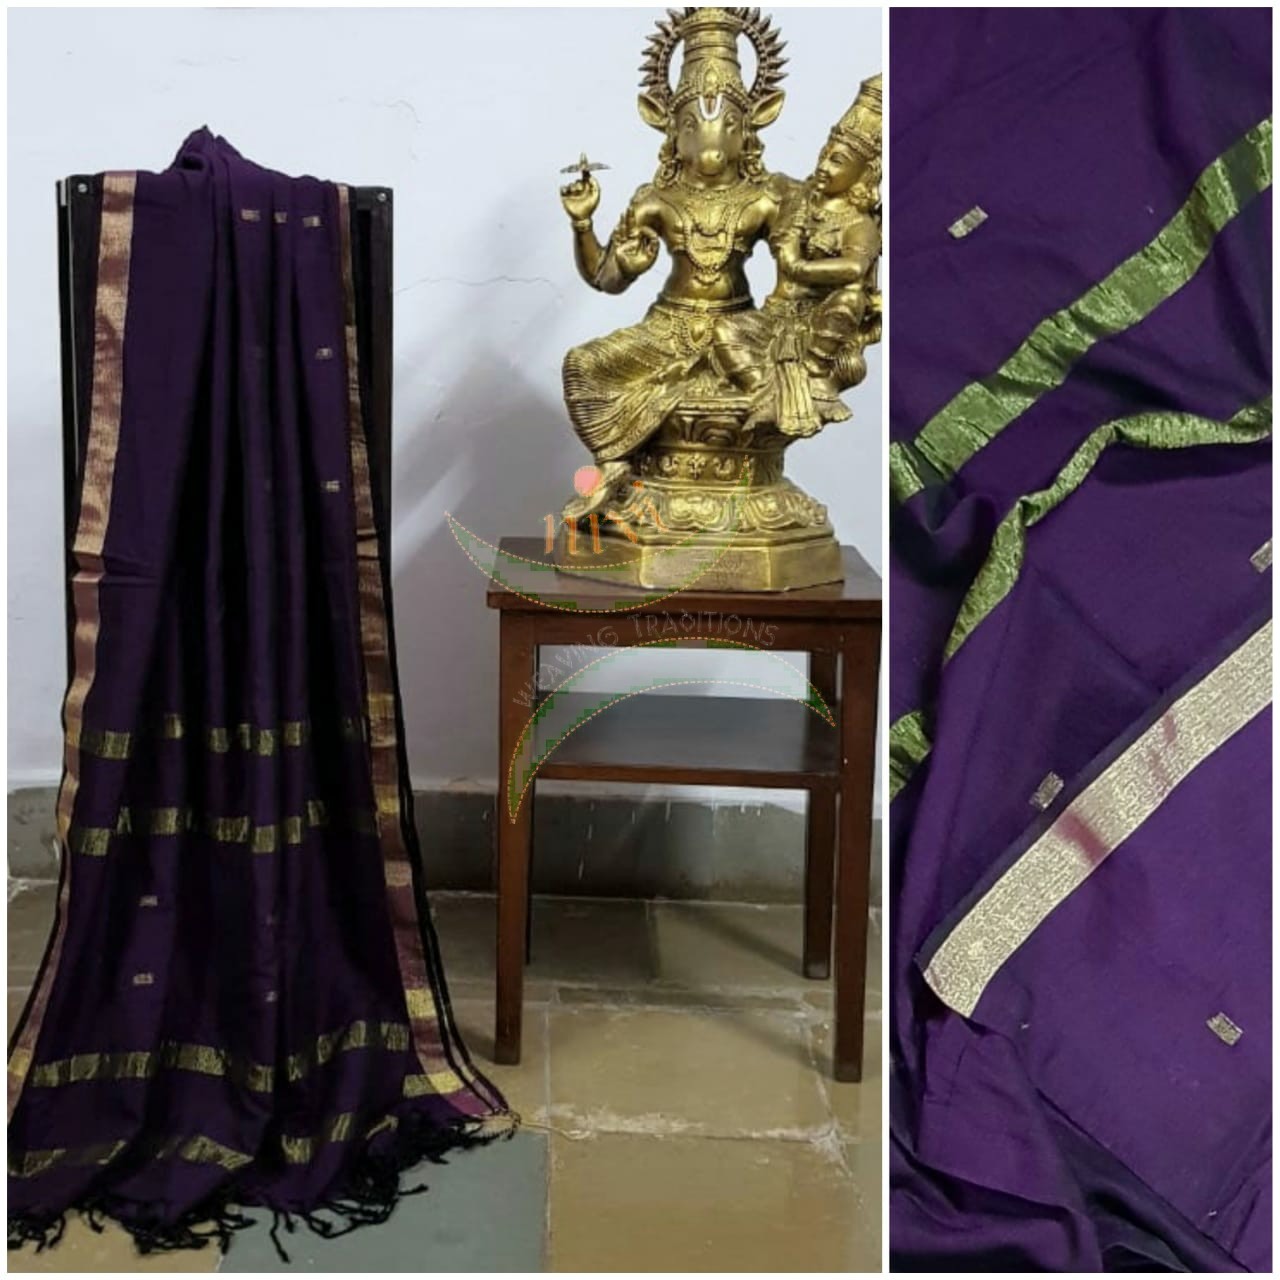 Purple handloom dupatta subtle gold borders and buttis on the body.